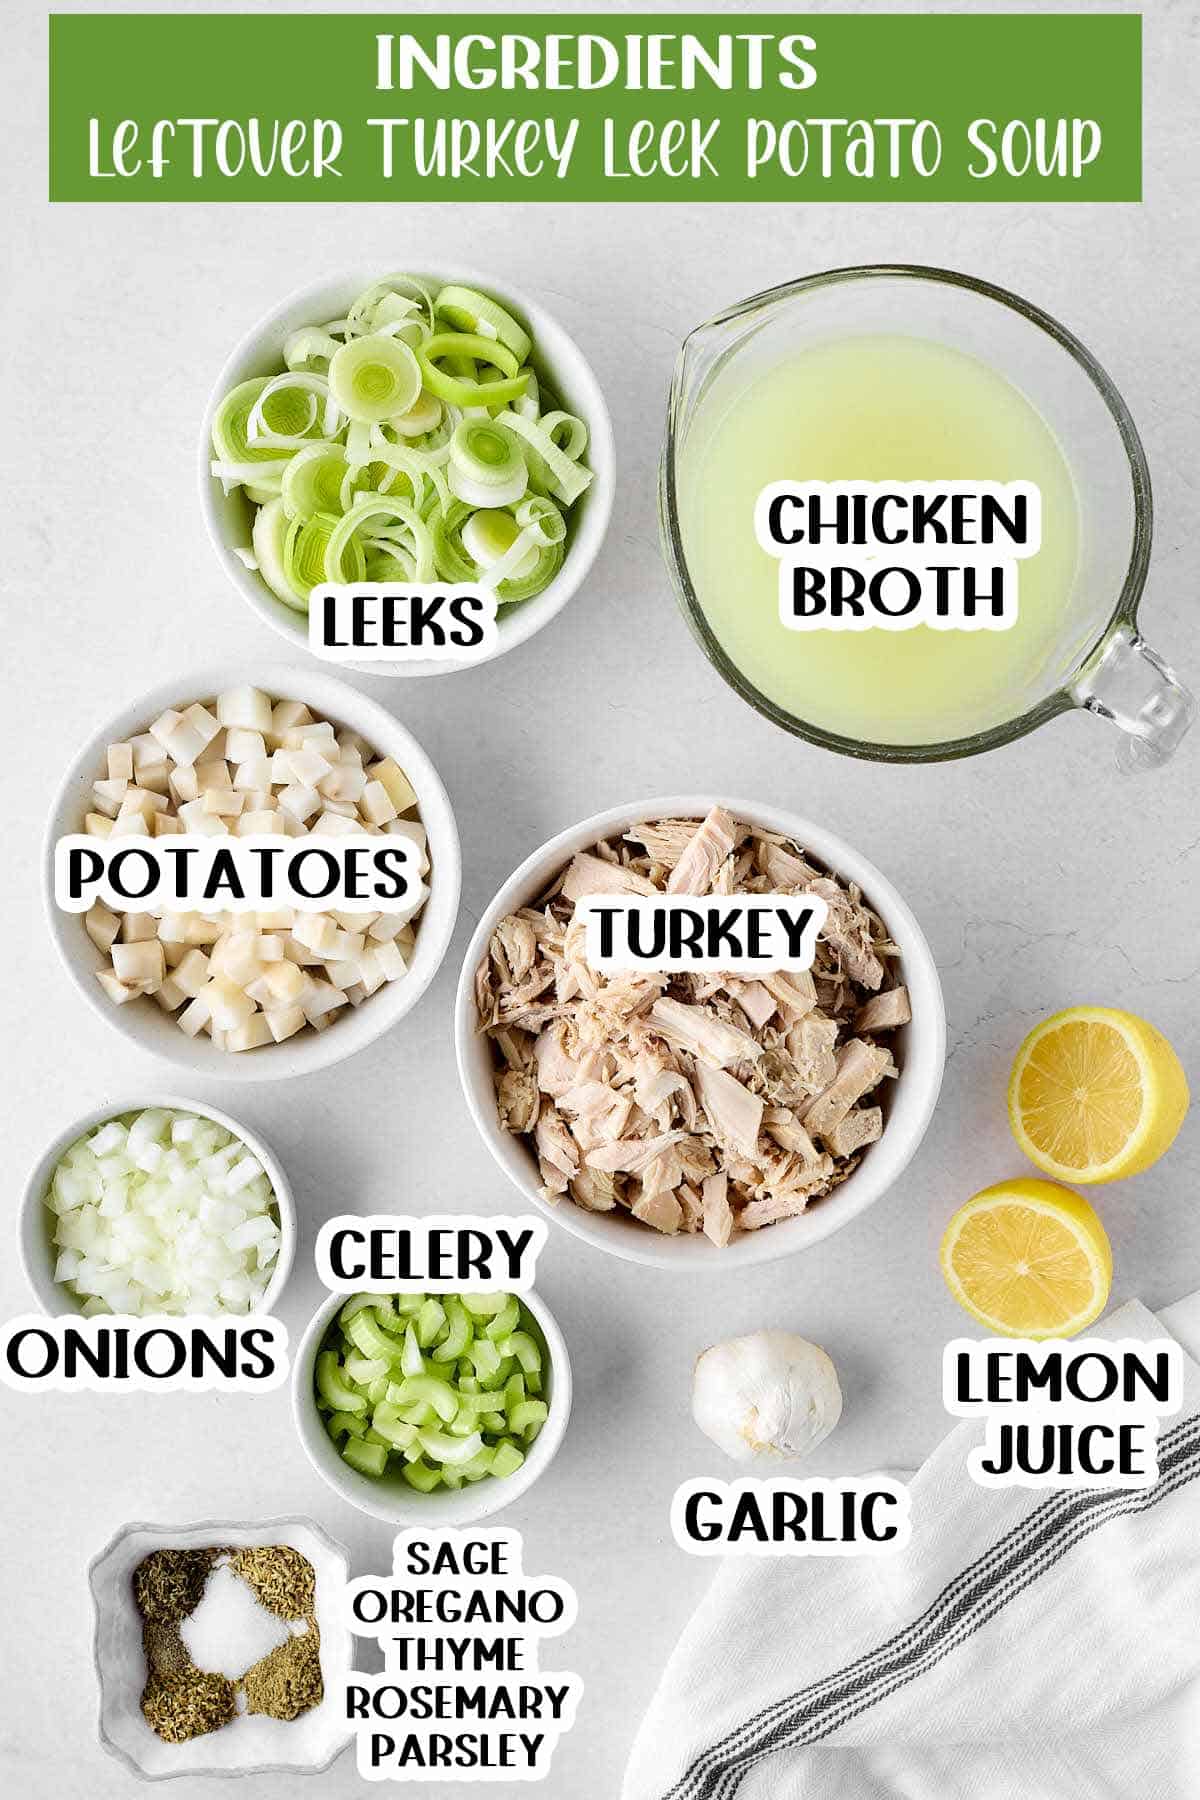 Ingredients for turkey leek potato soup.